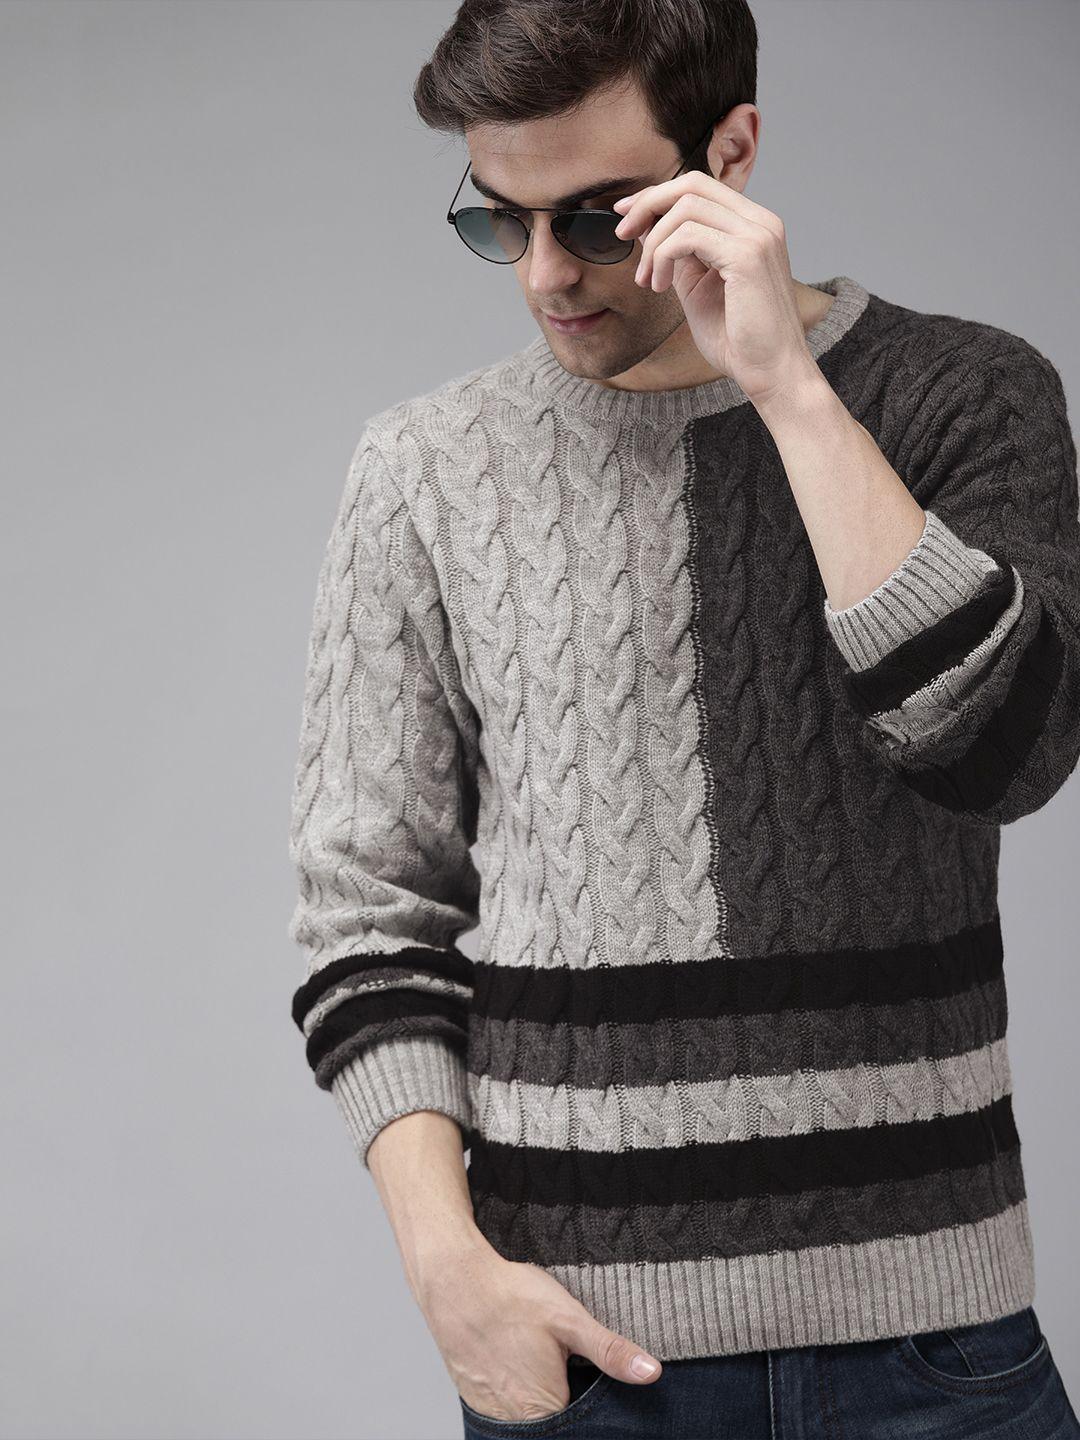 the-roadster-lifestyle-co-men-grey-&-black-self-design-sweater